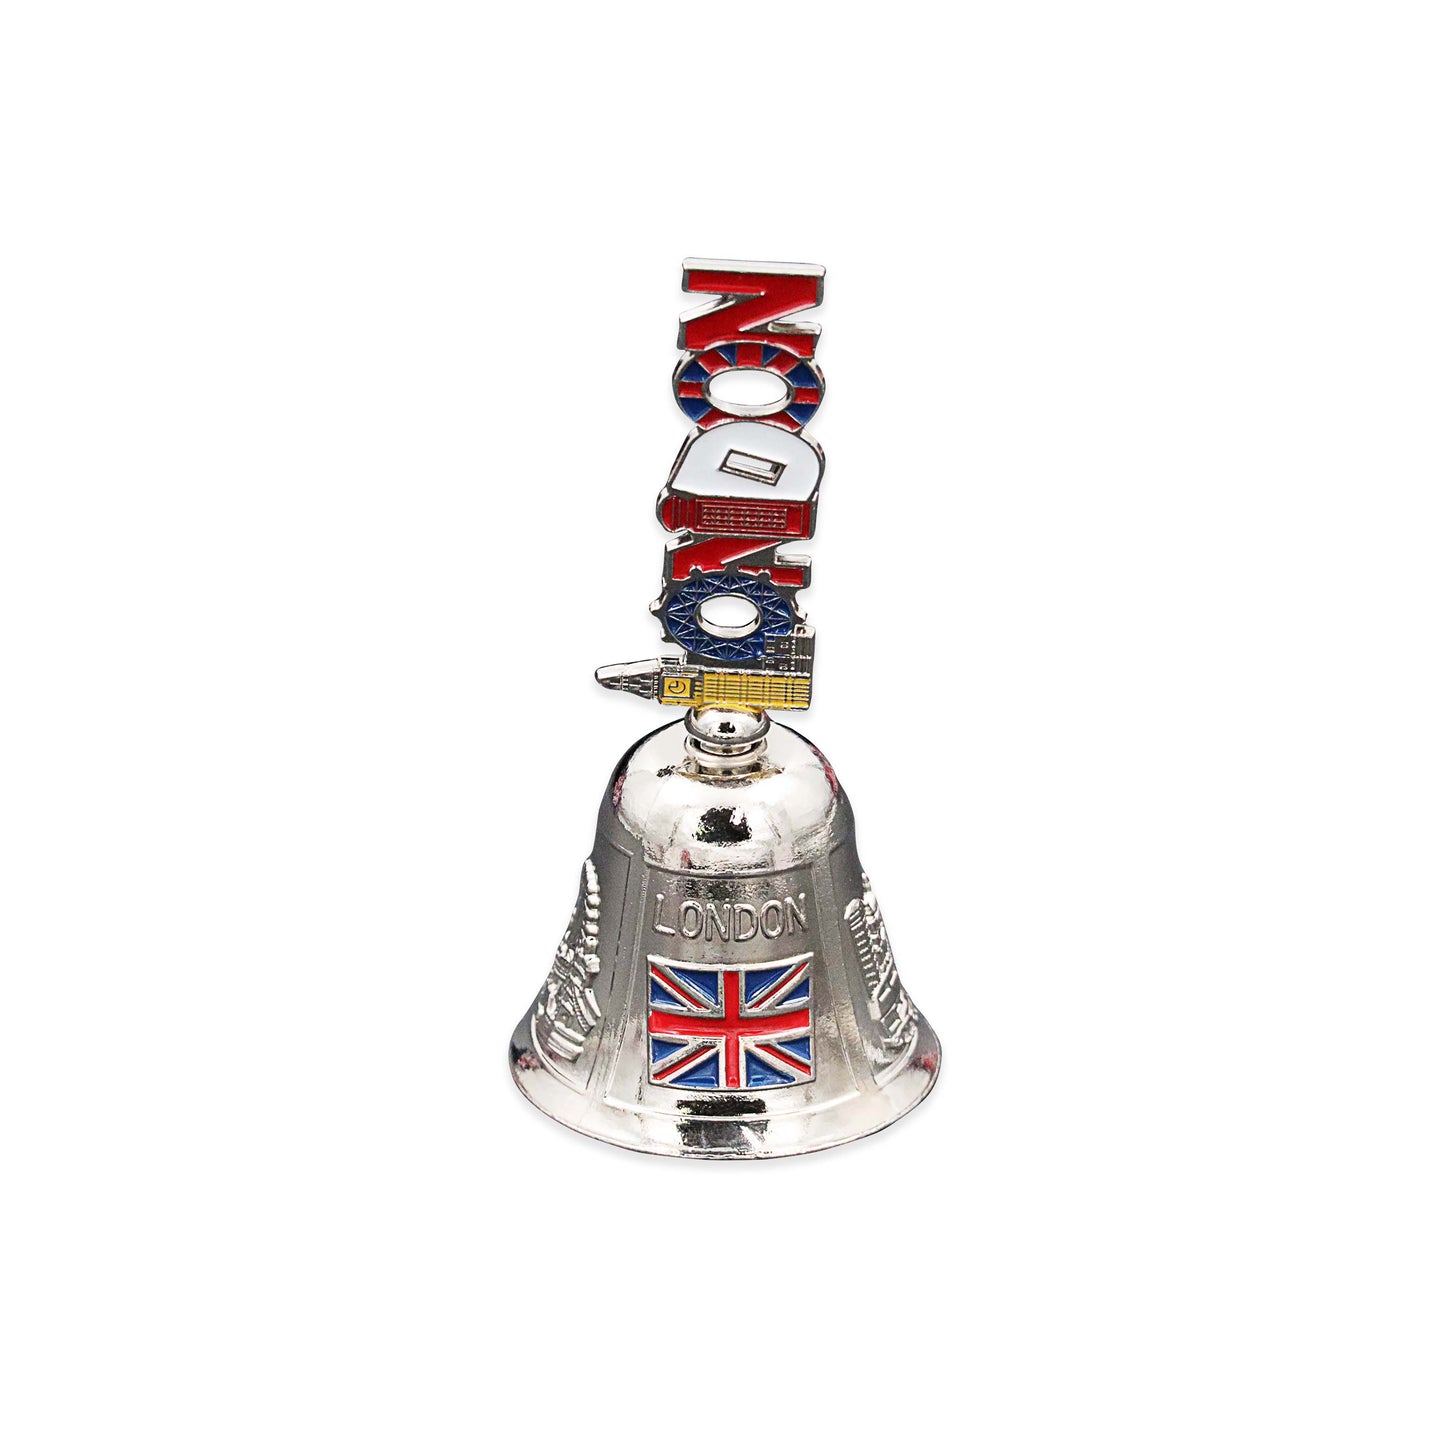 London souvenir dinner bell